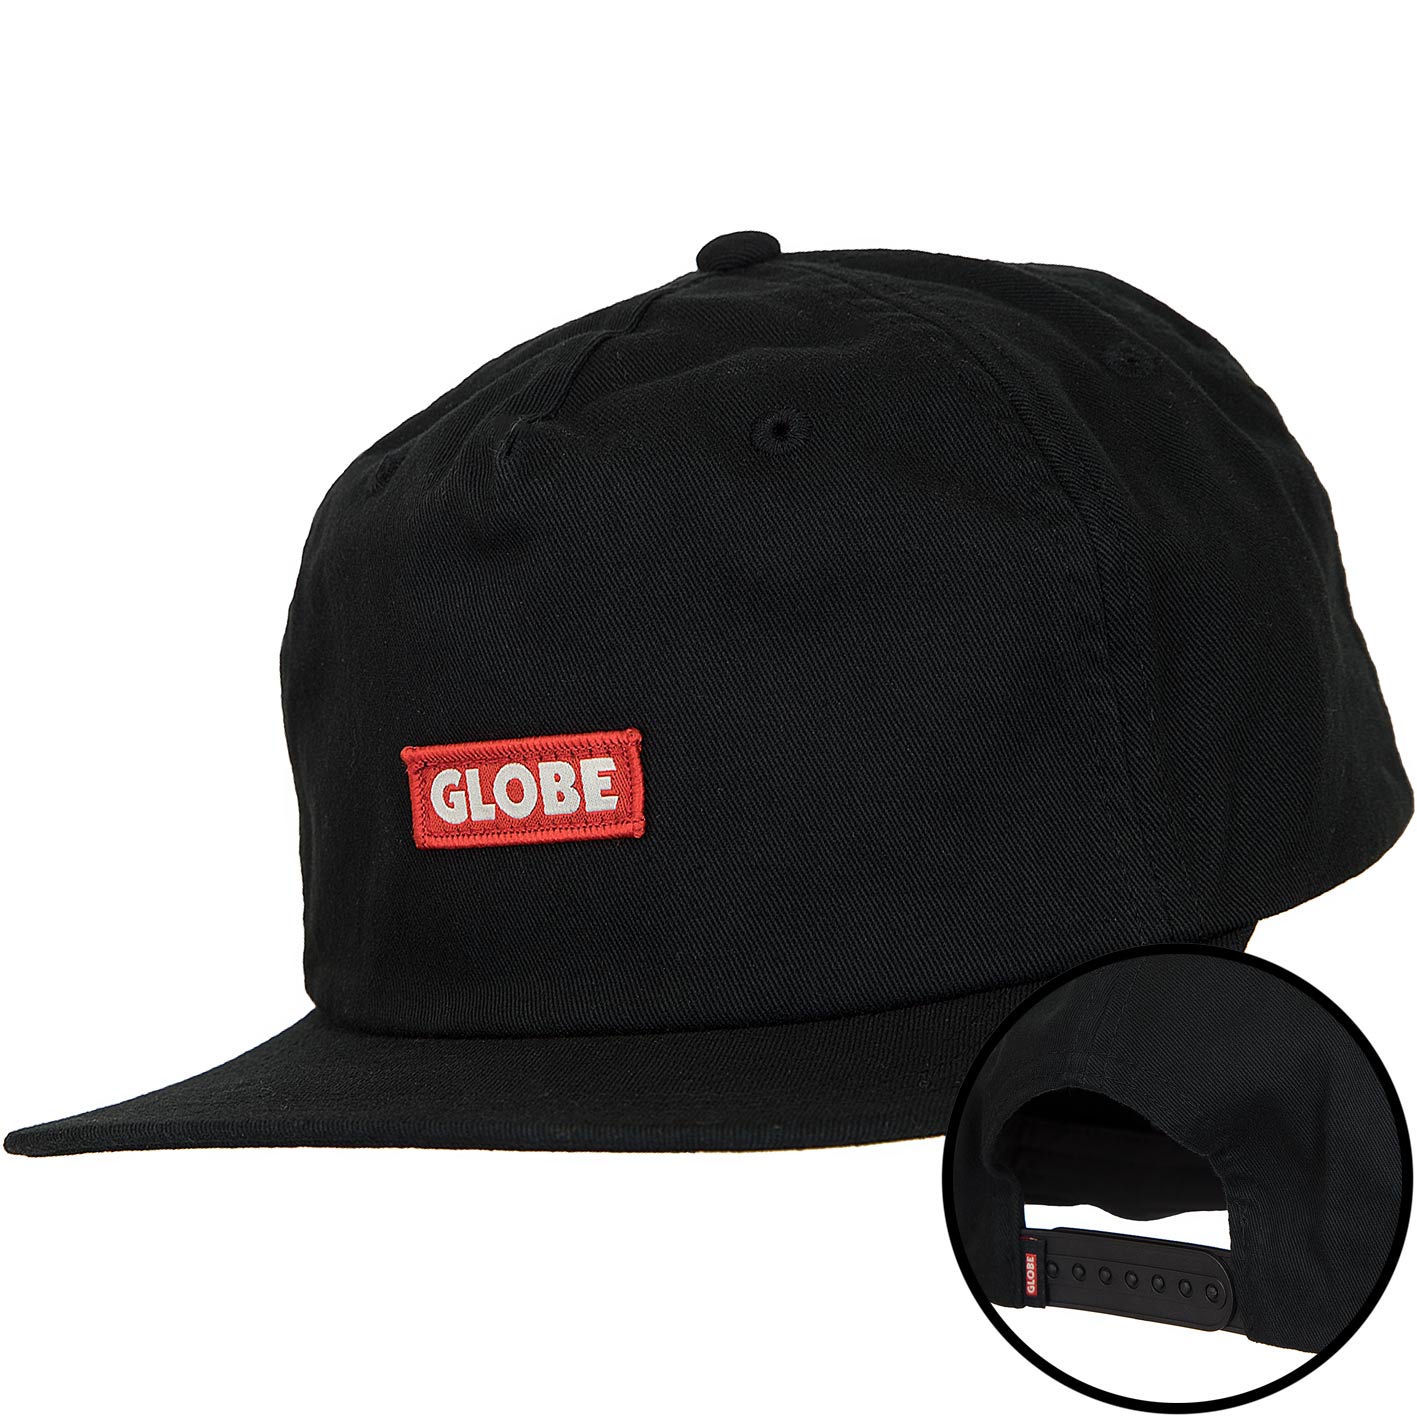 ☆ Globe Snapback Cap Bar schwarz - hier bestellen!